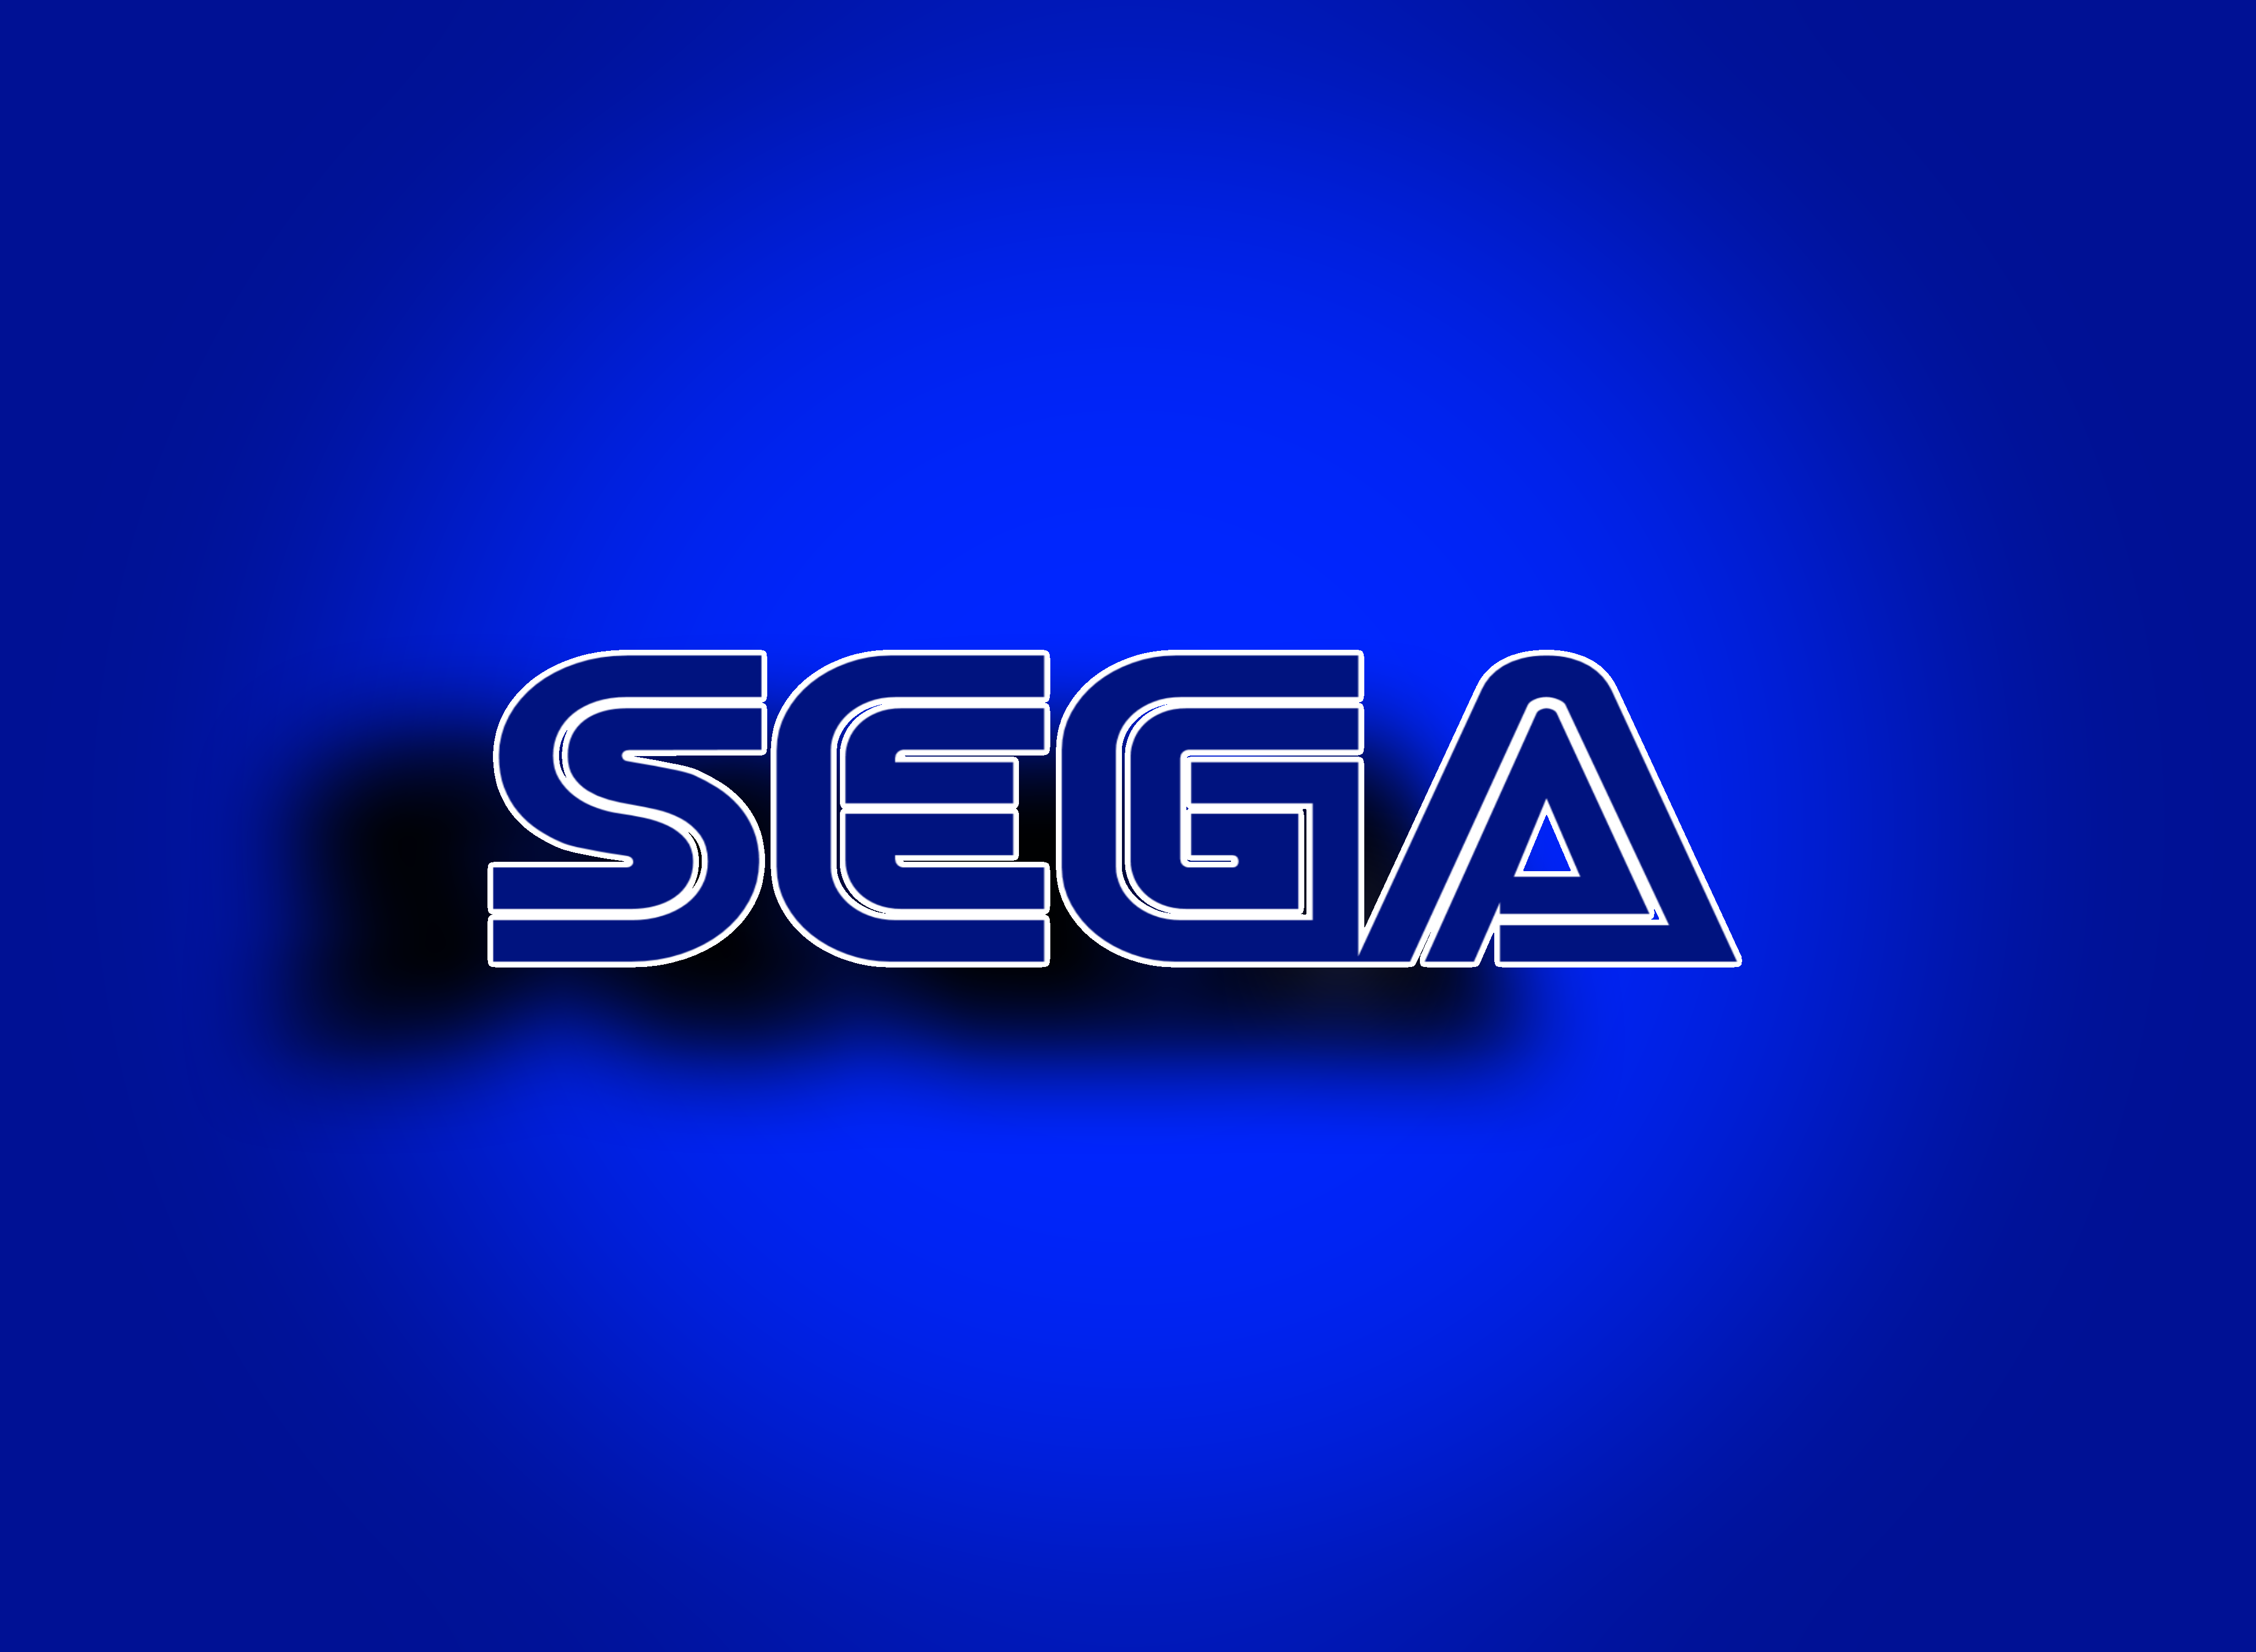 Sega Saturn Background. Saturn